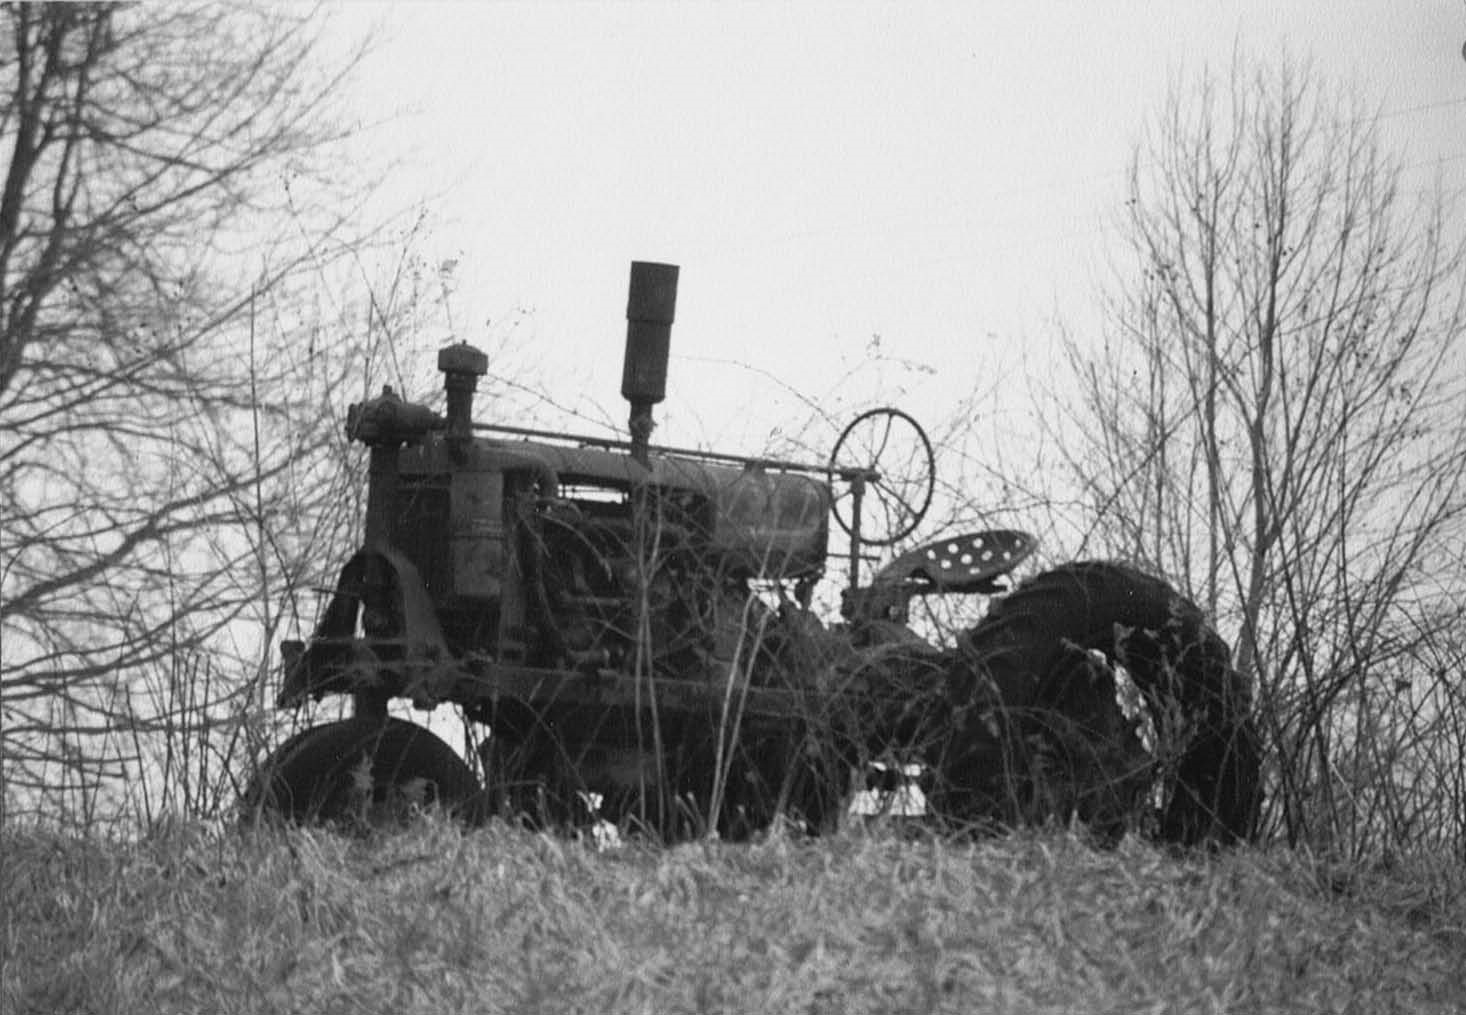 John Walker's old tractor